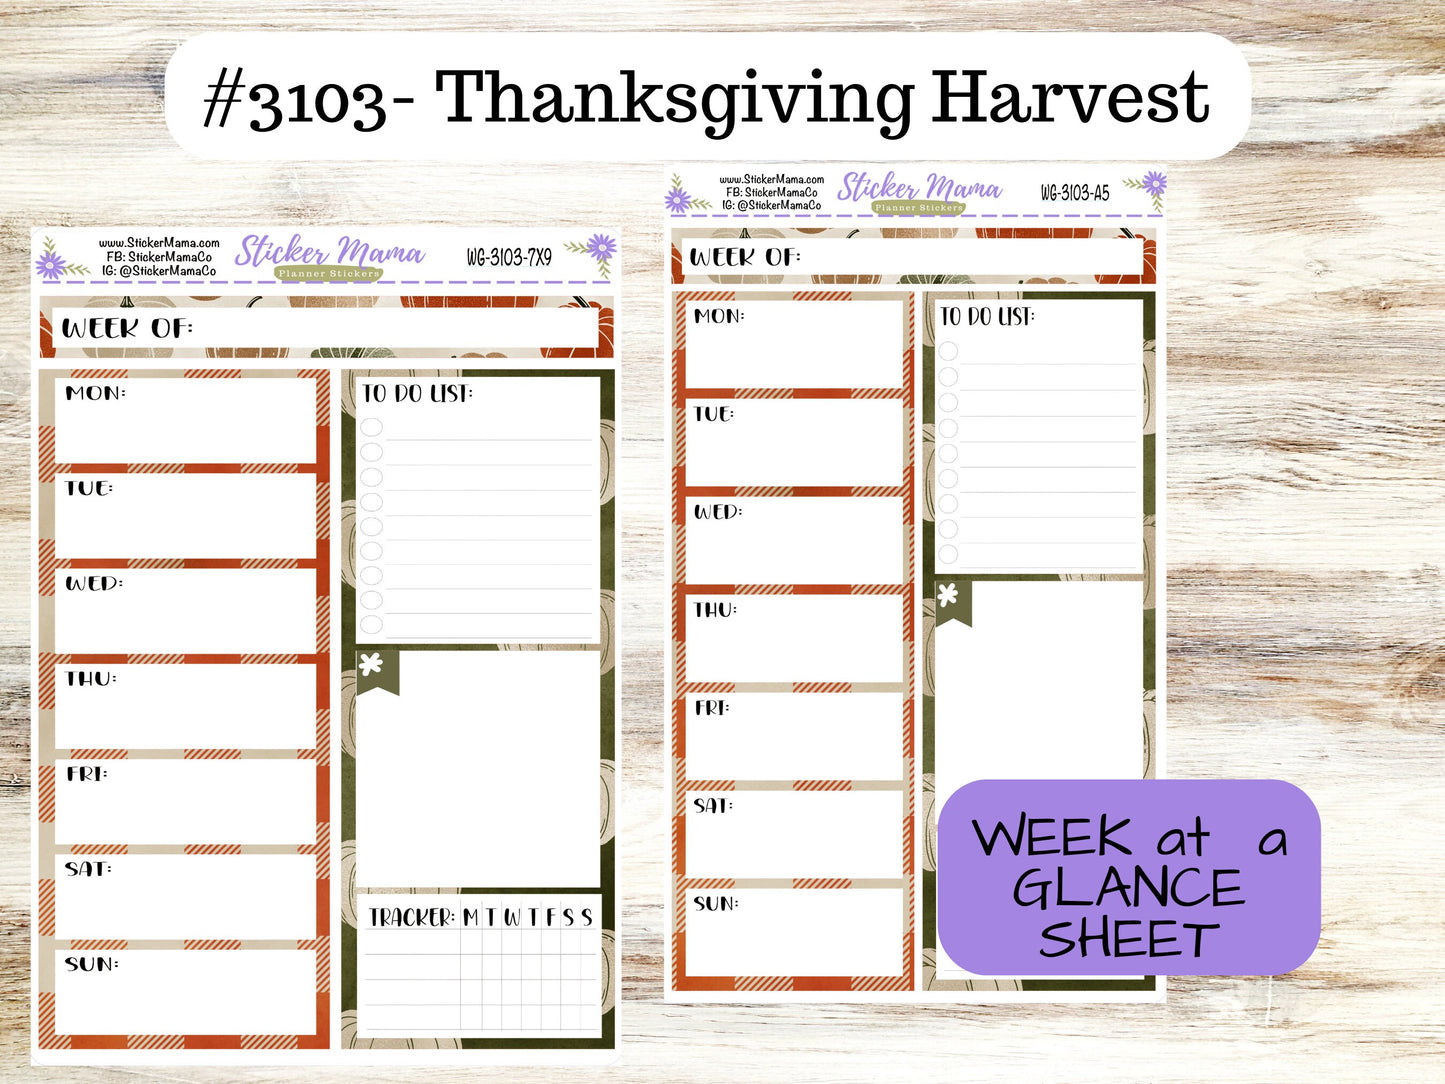 WEEK at a GLANCE-Kit #3103 || Harvest Thanksgiving || Week at a Glance - weekly glance 7x9 or a5